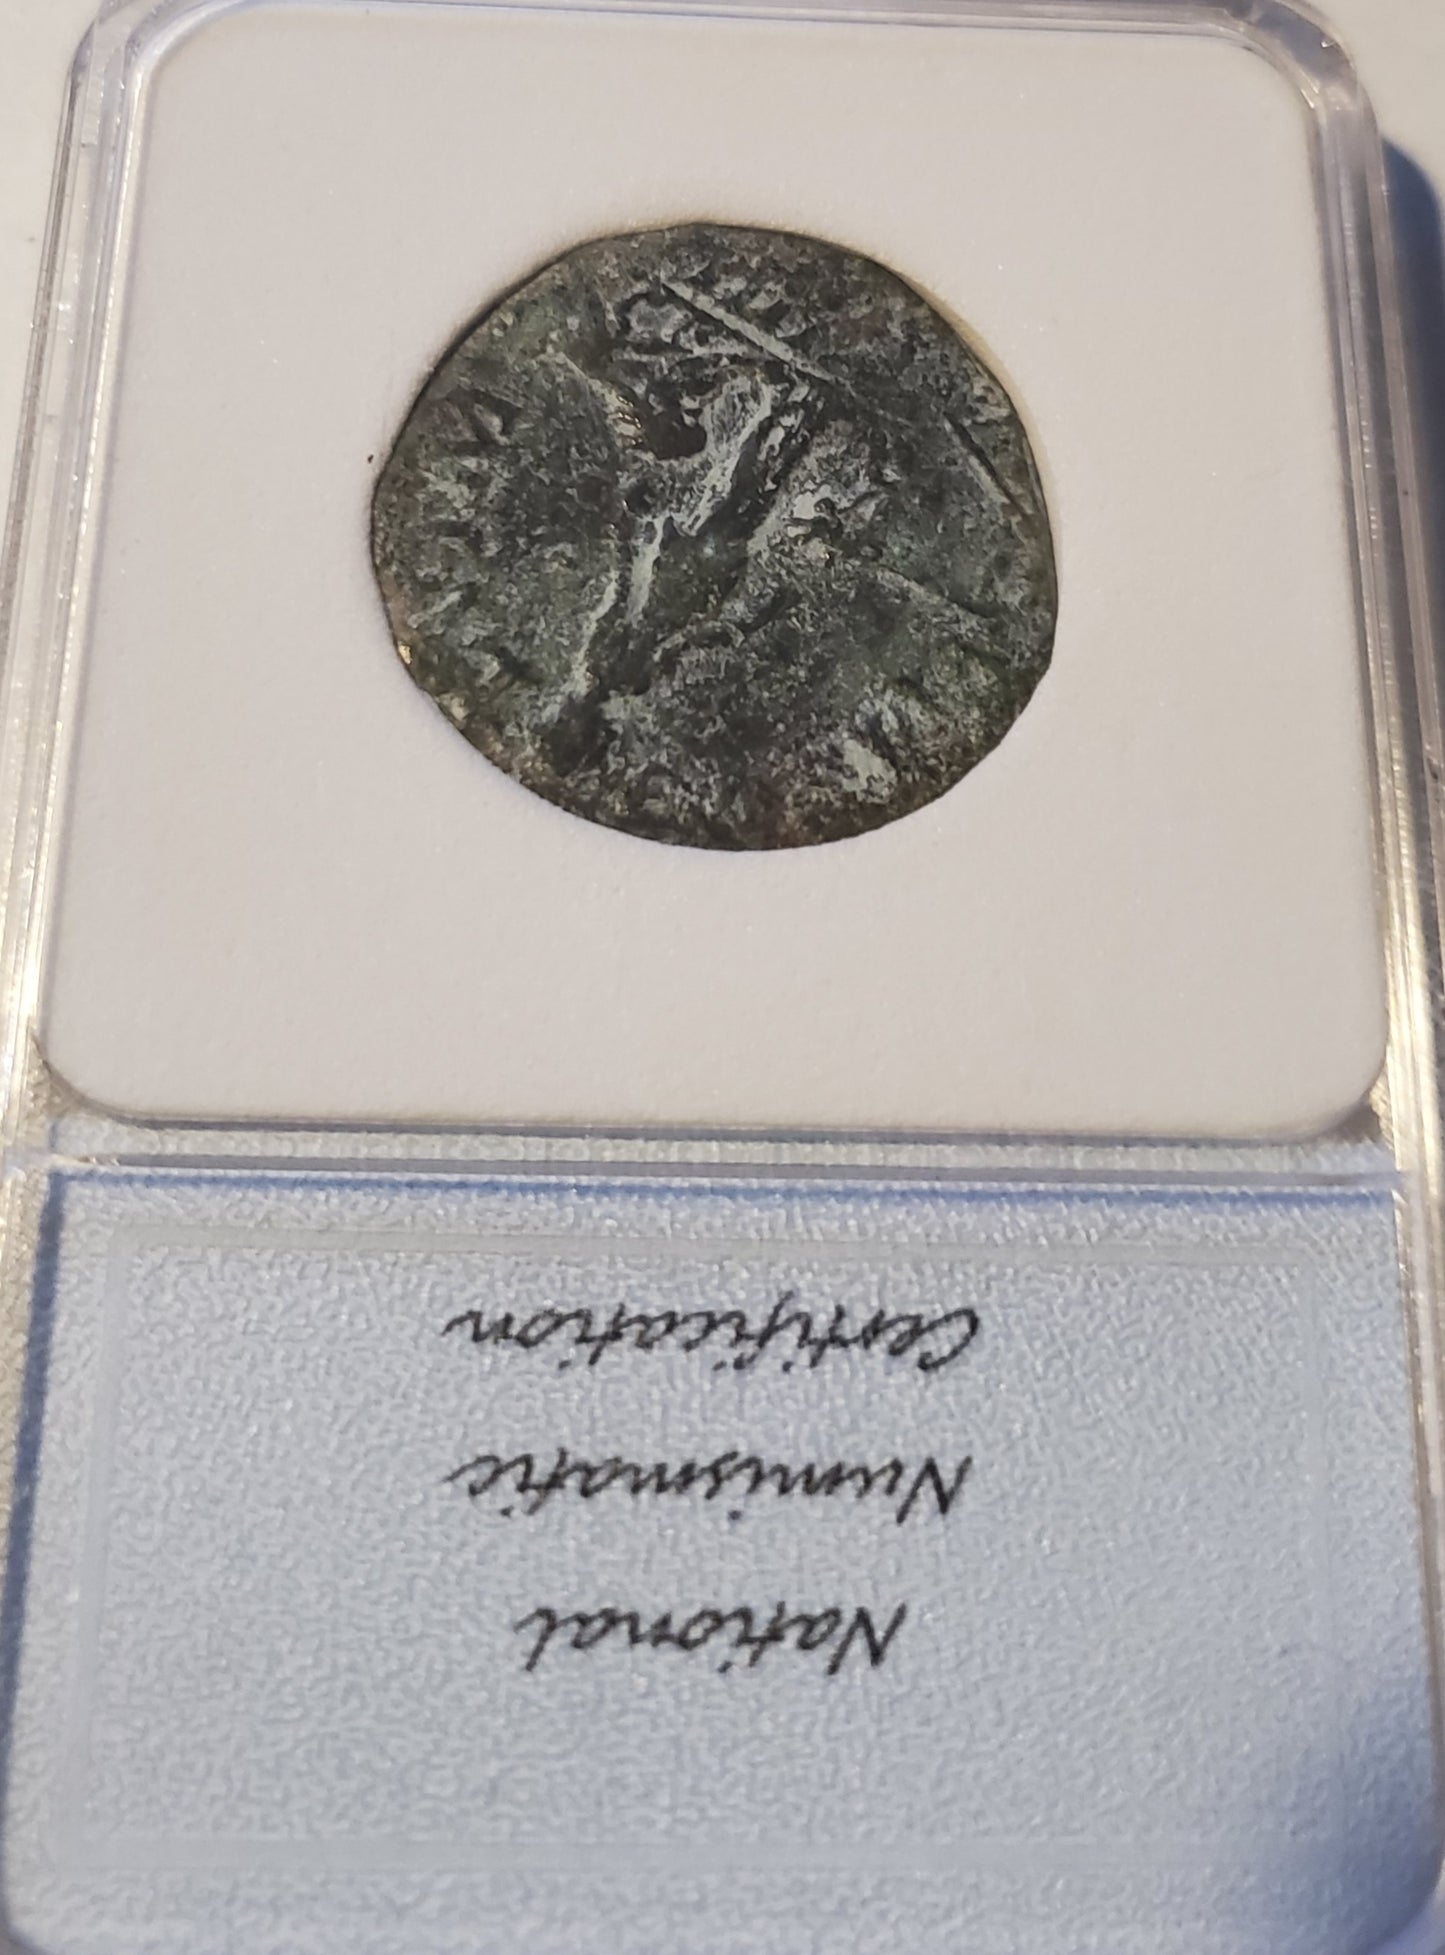 238-244 AD Ancient Roman Coin